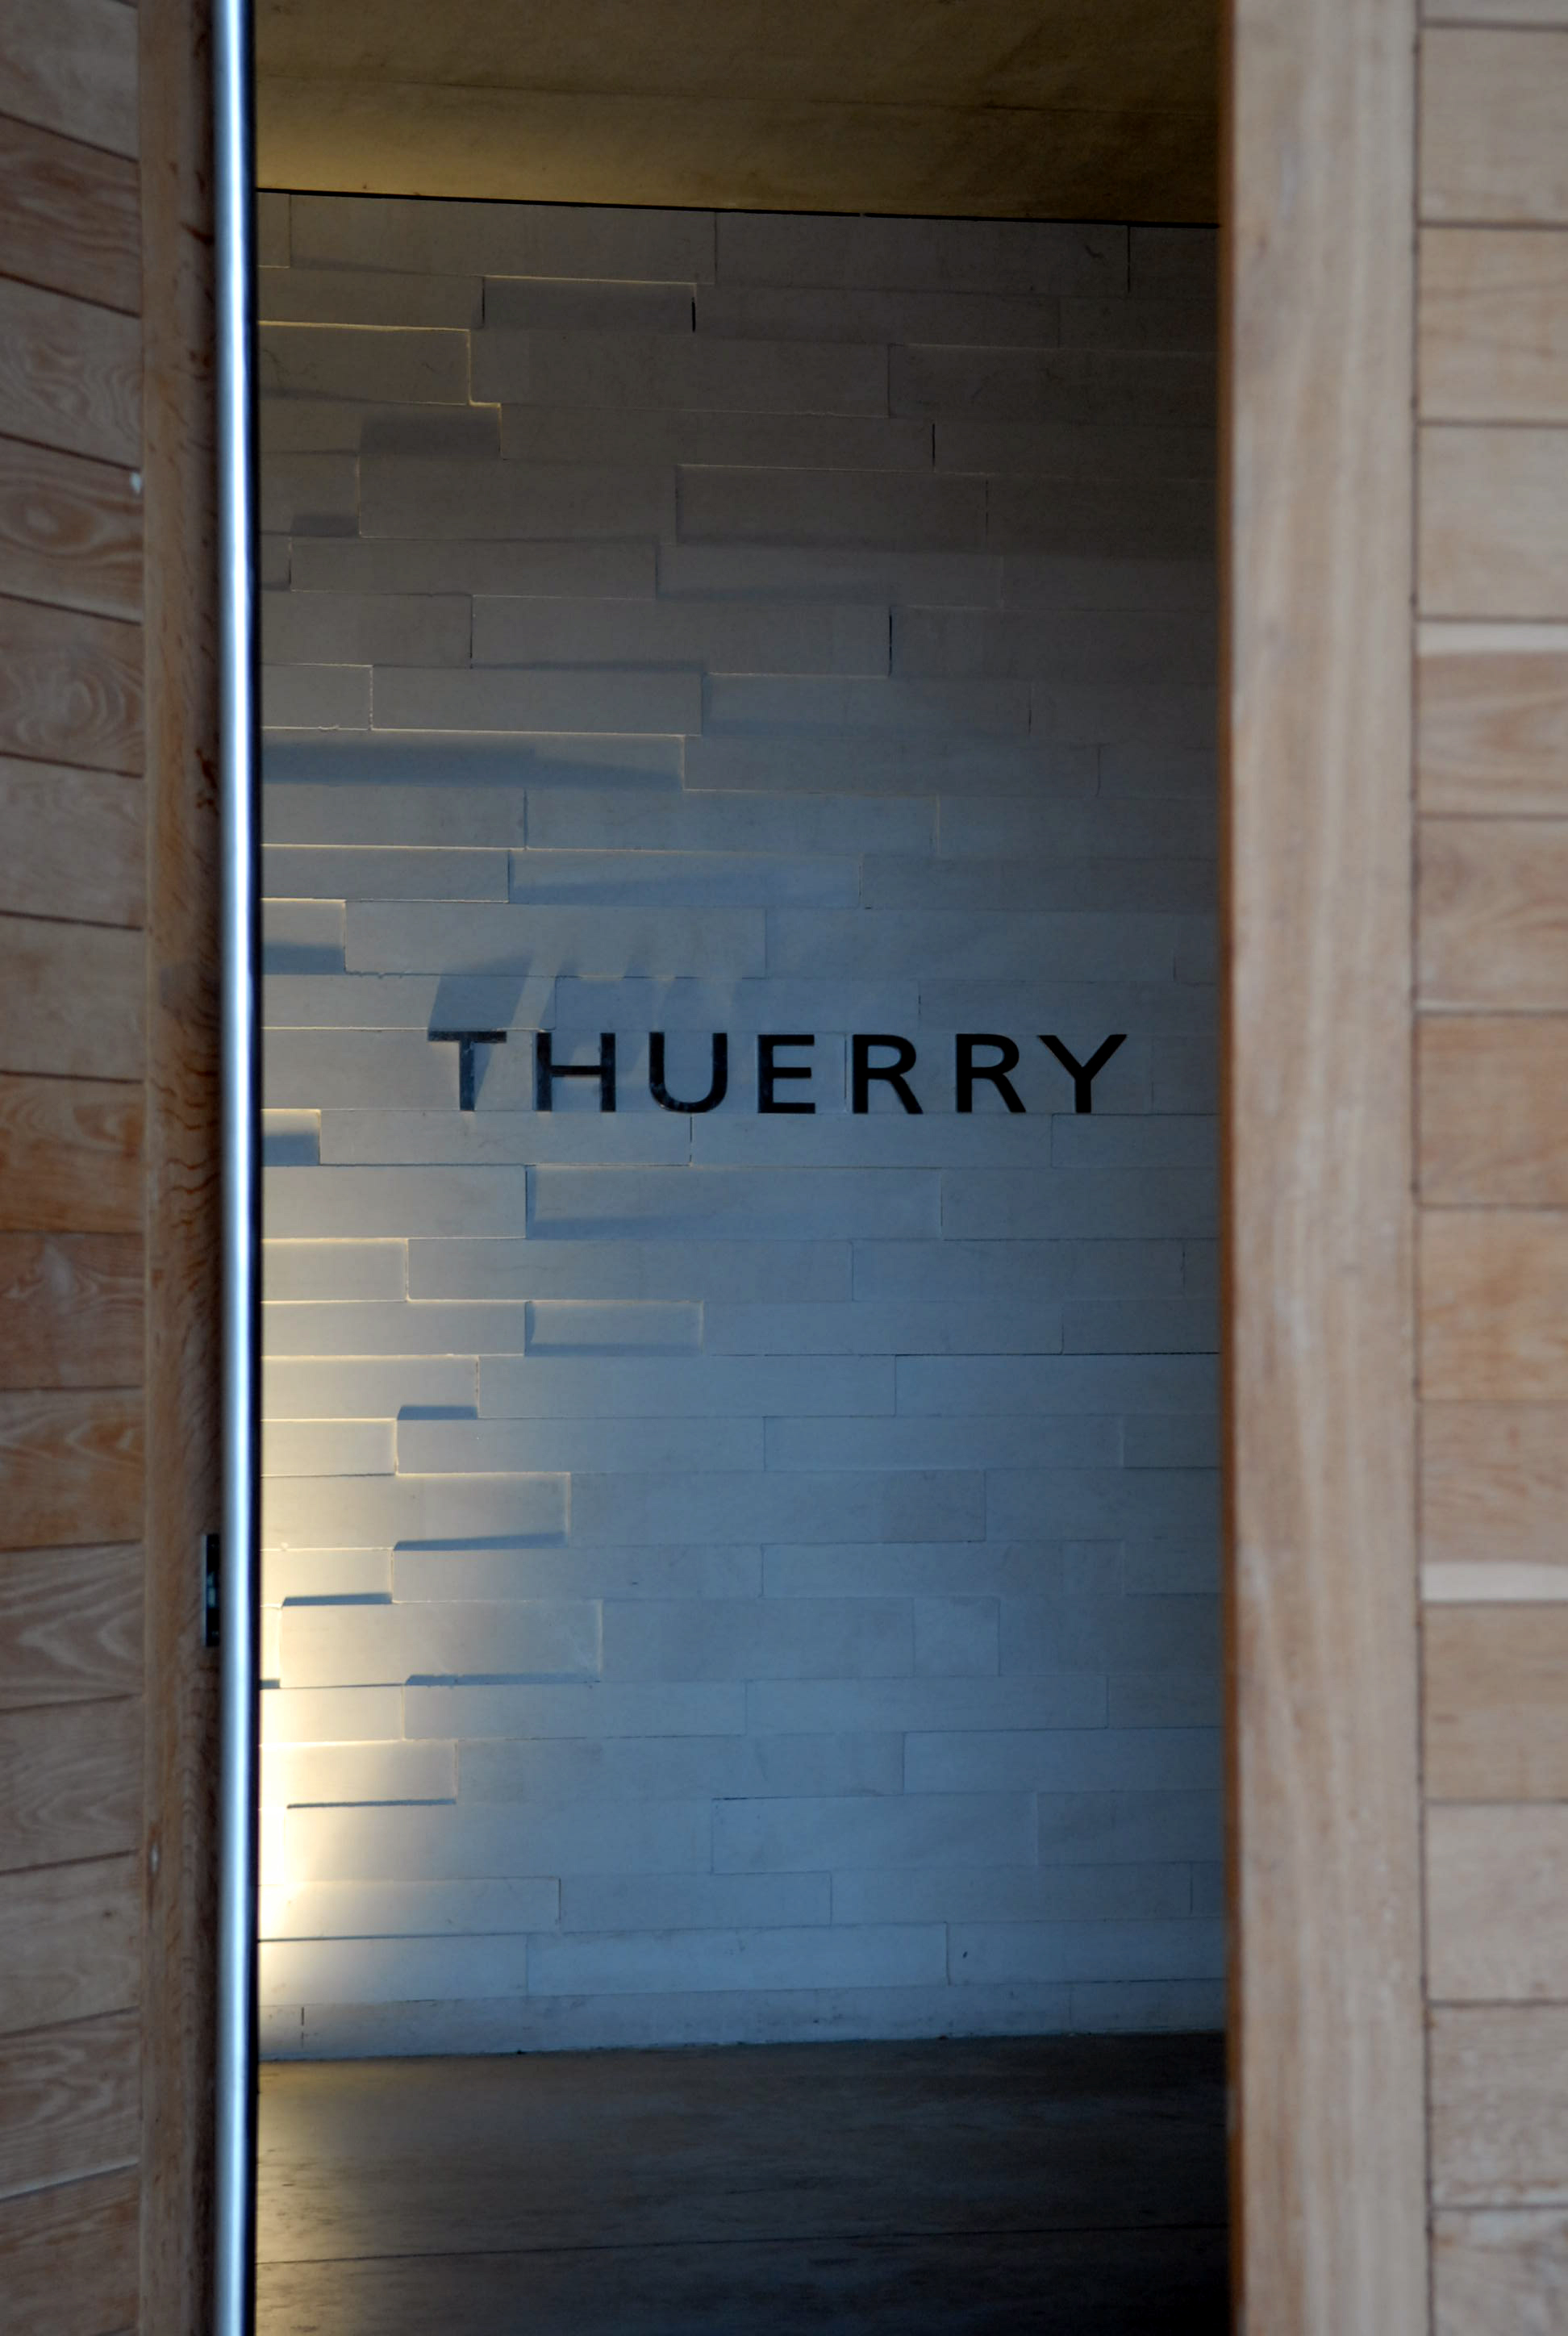 Château Thuerry - Château Thuerry